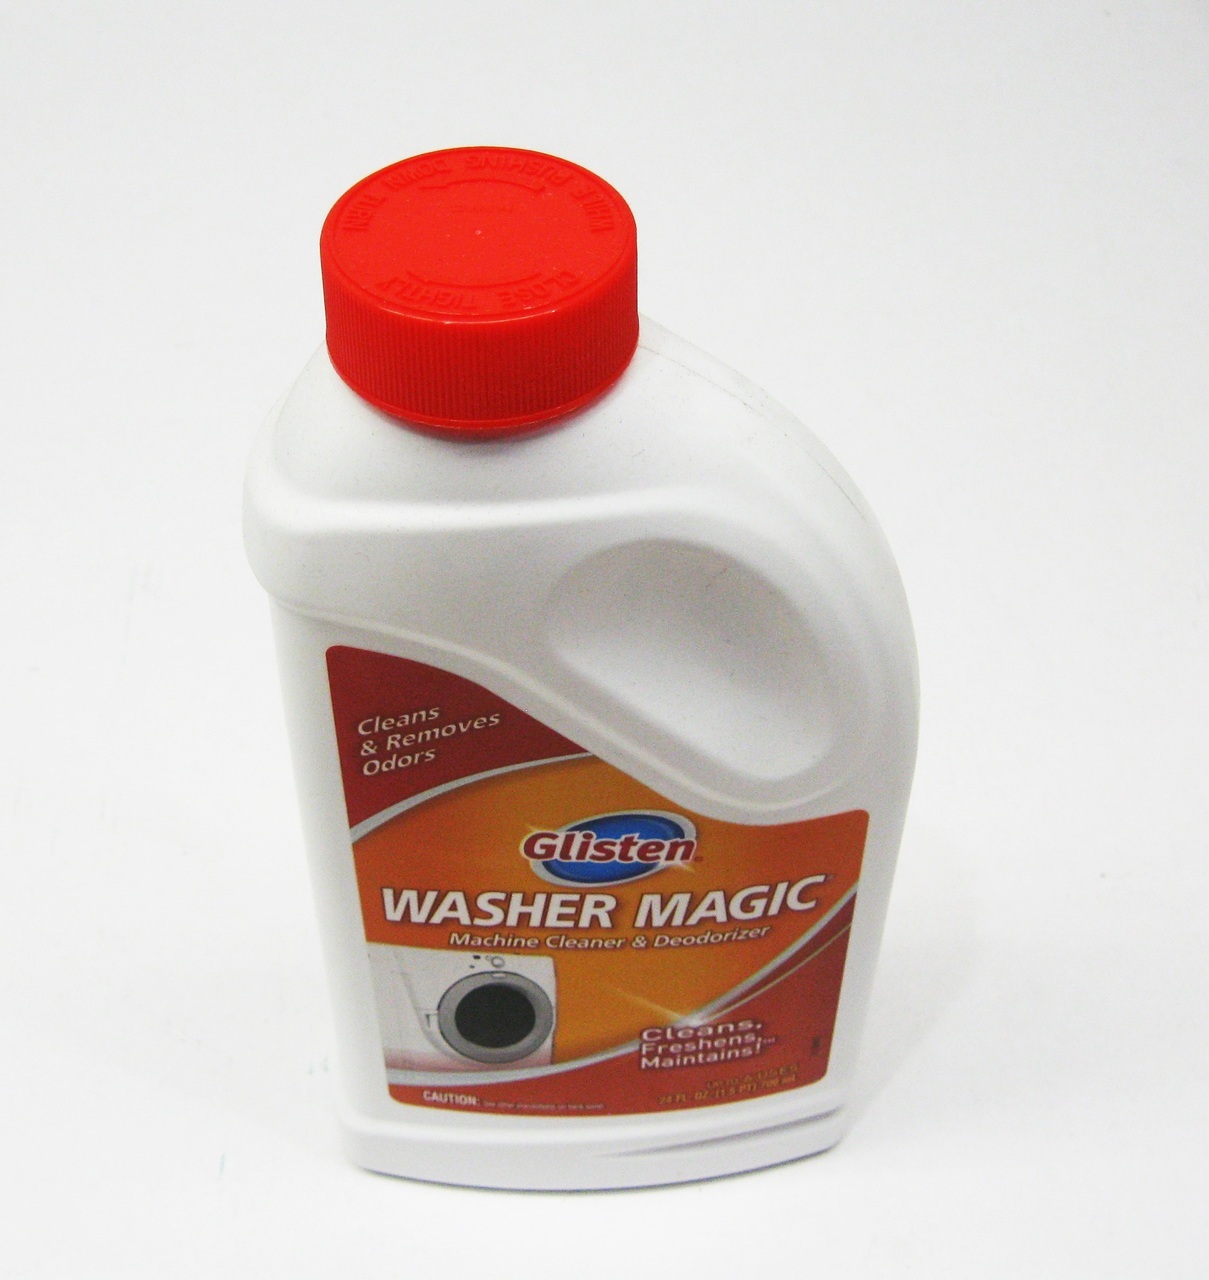 Glisten Washing Machine Magic cleaner and deodorizer,